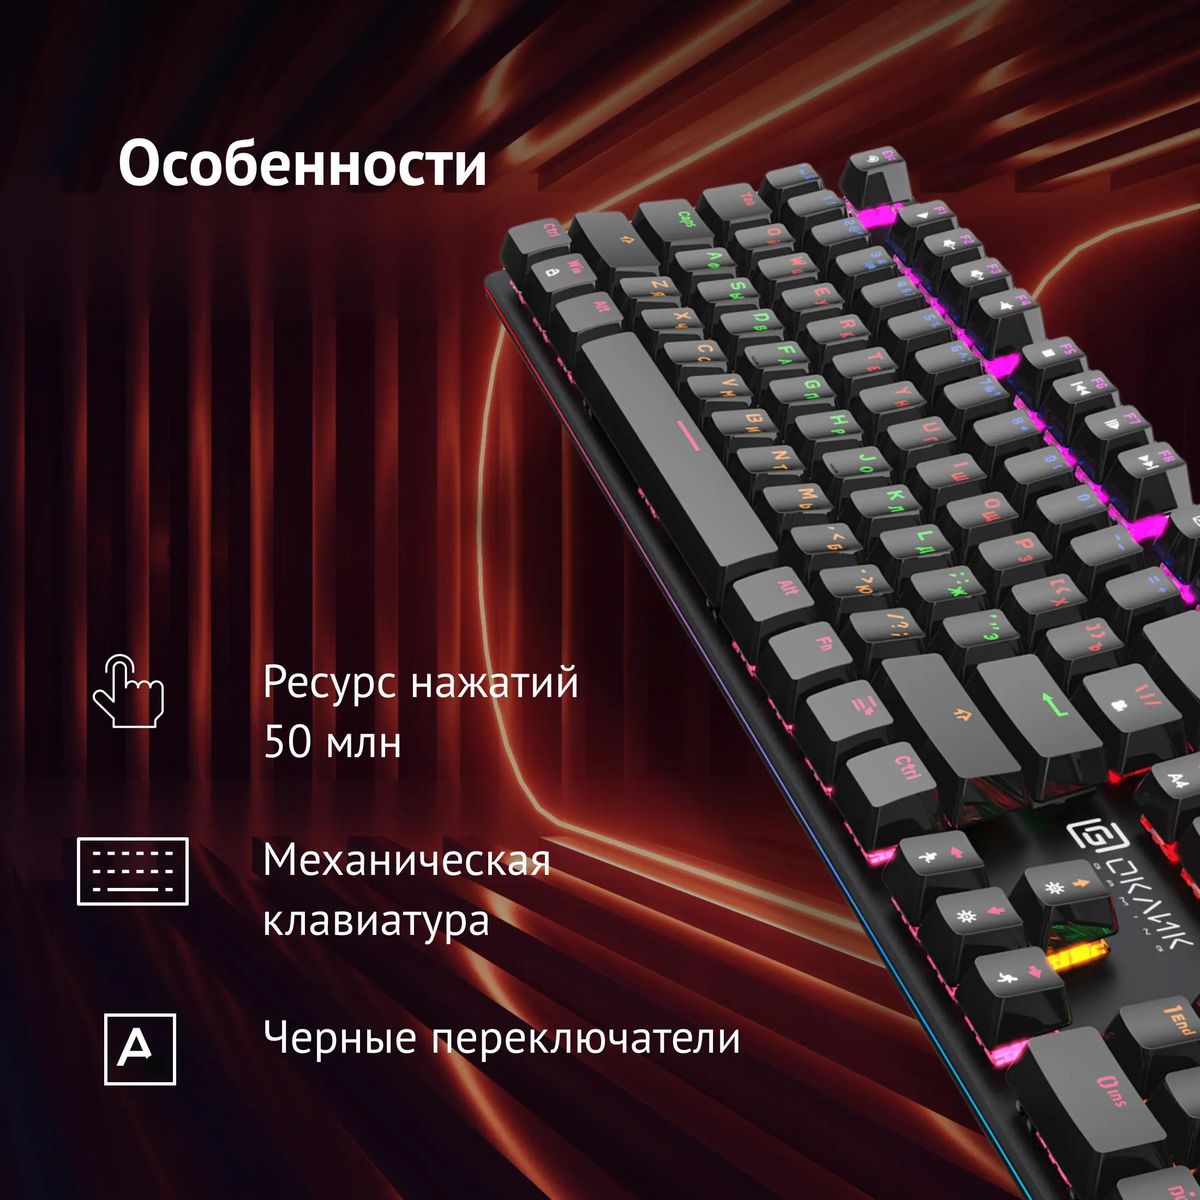 Клавиатура Oklick 990 G2, черный